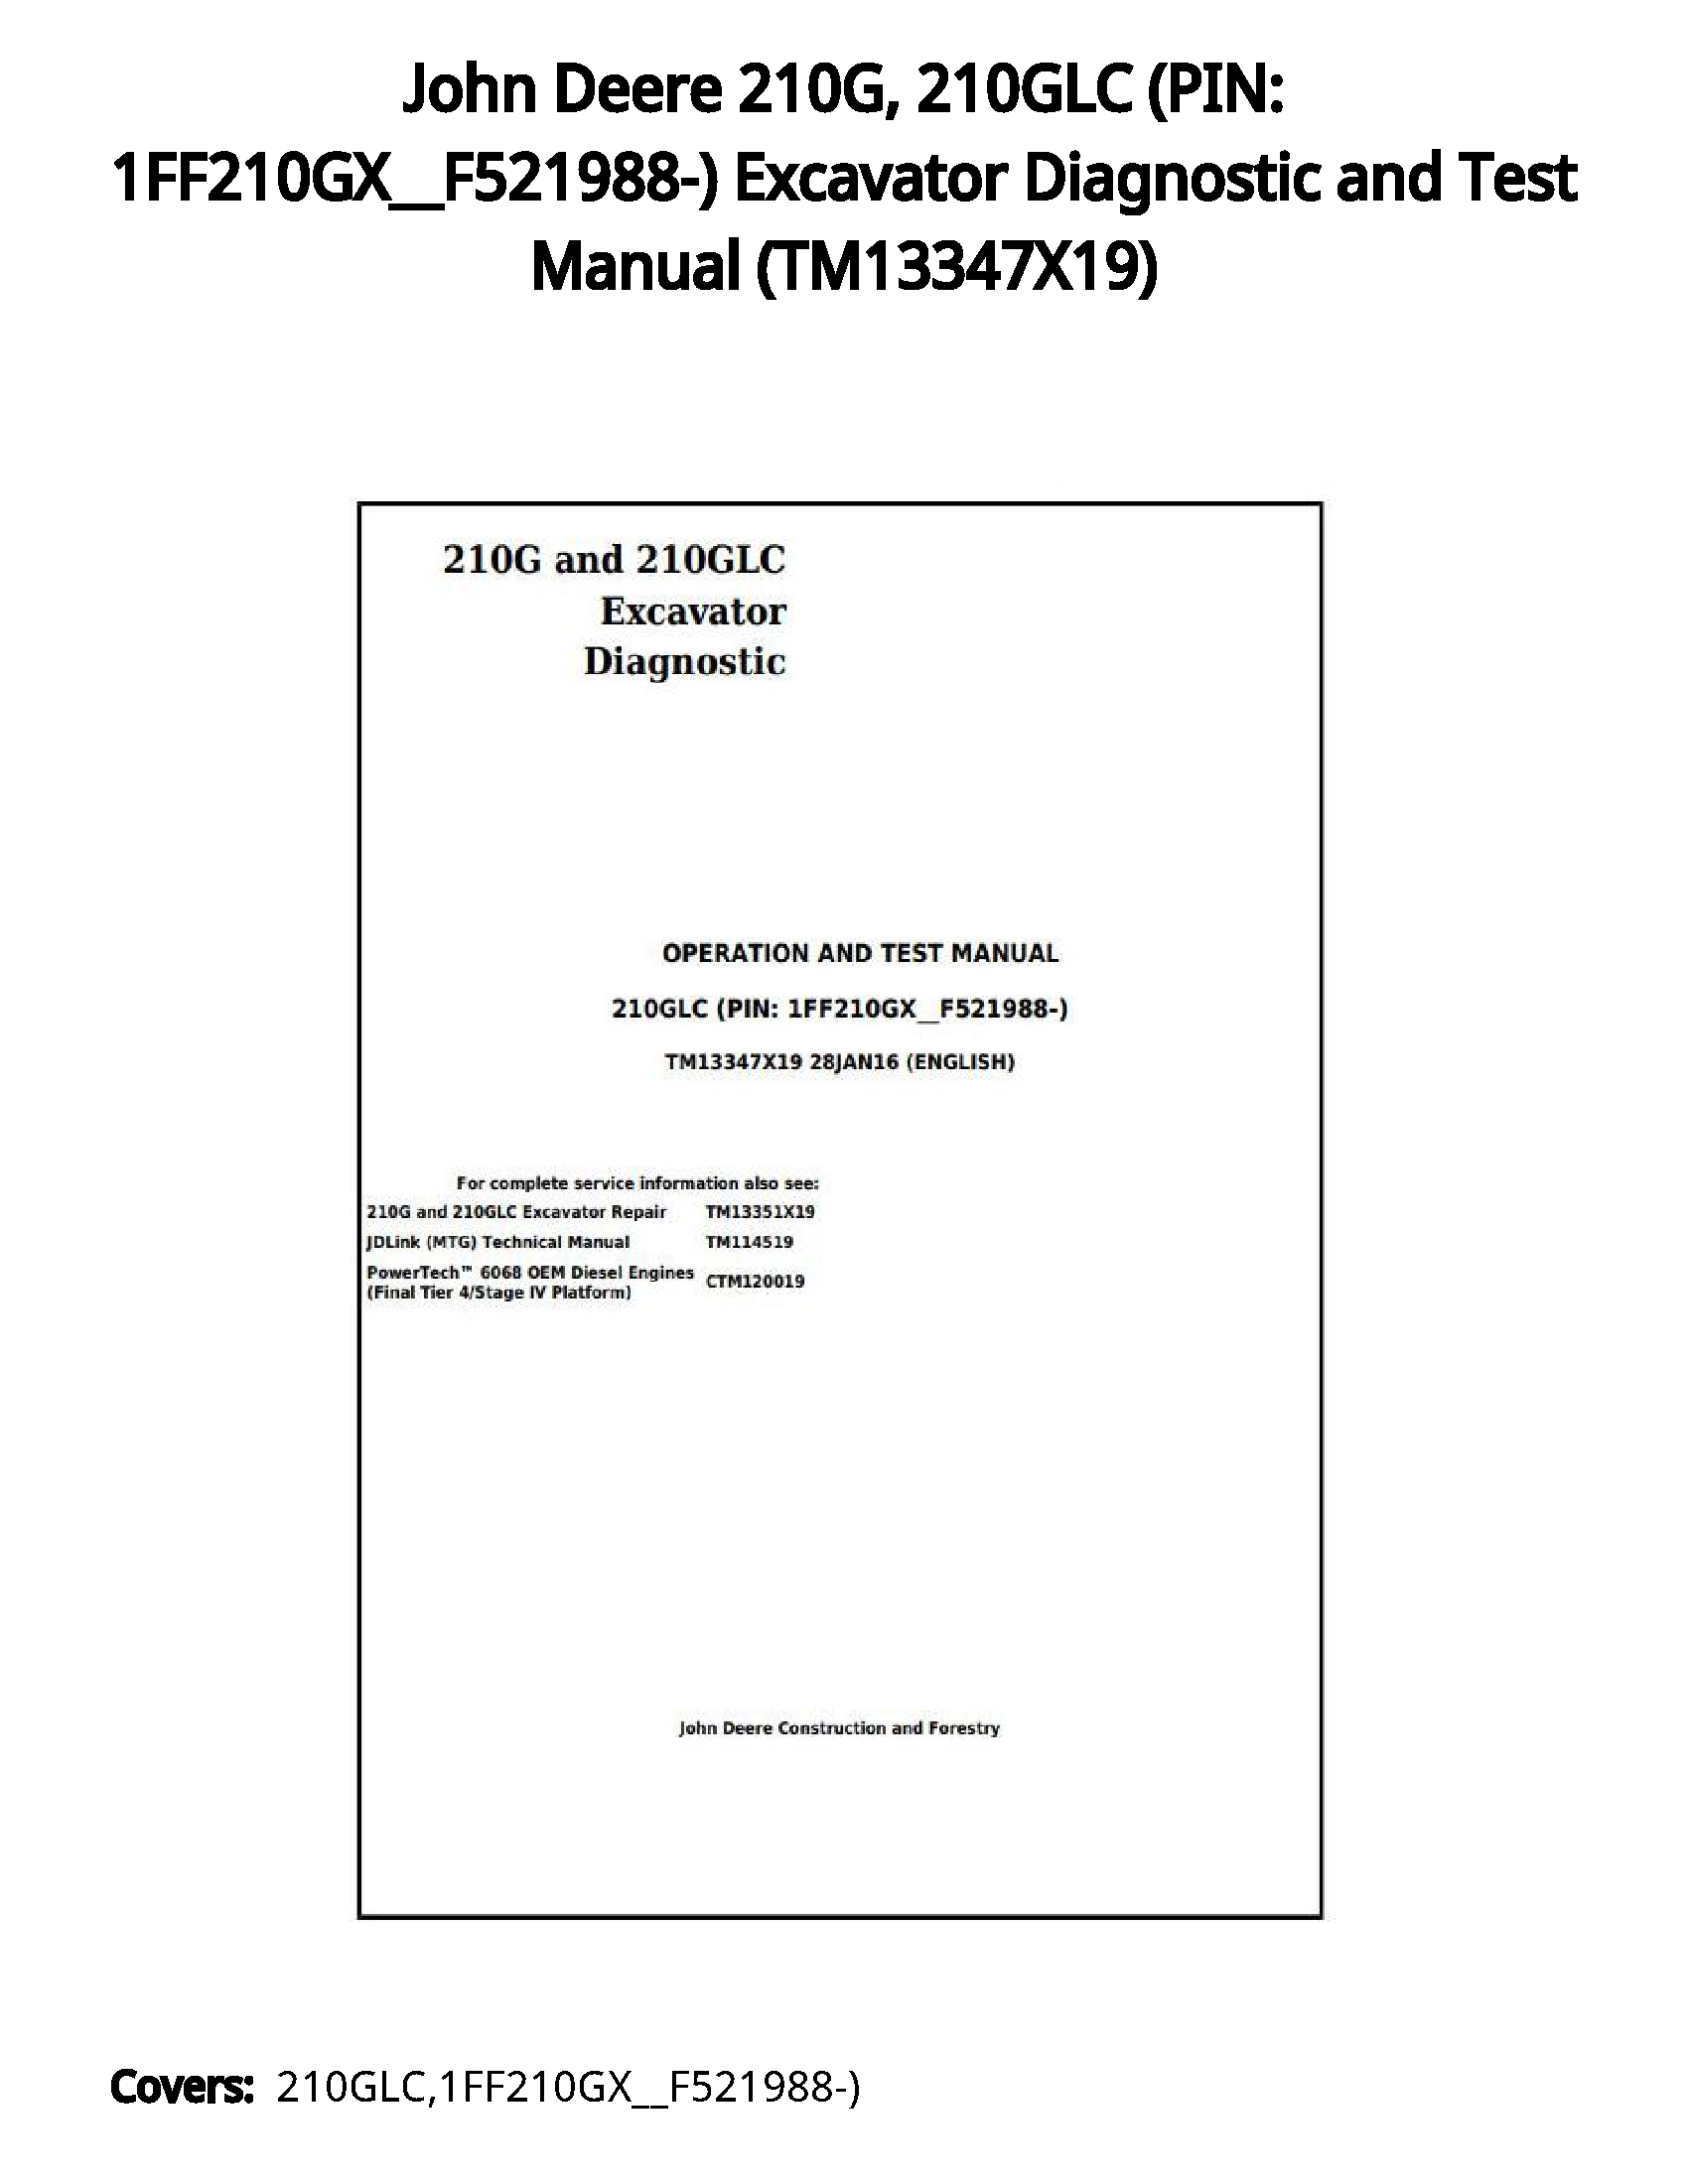 John Deere 210G  210GLC (PIN: 1FF210GX__F521988-) Excavator Diagnostic and Test Manual - TM13347X19